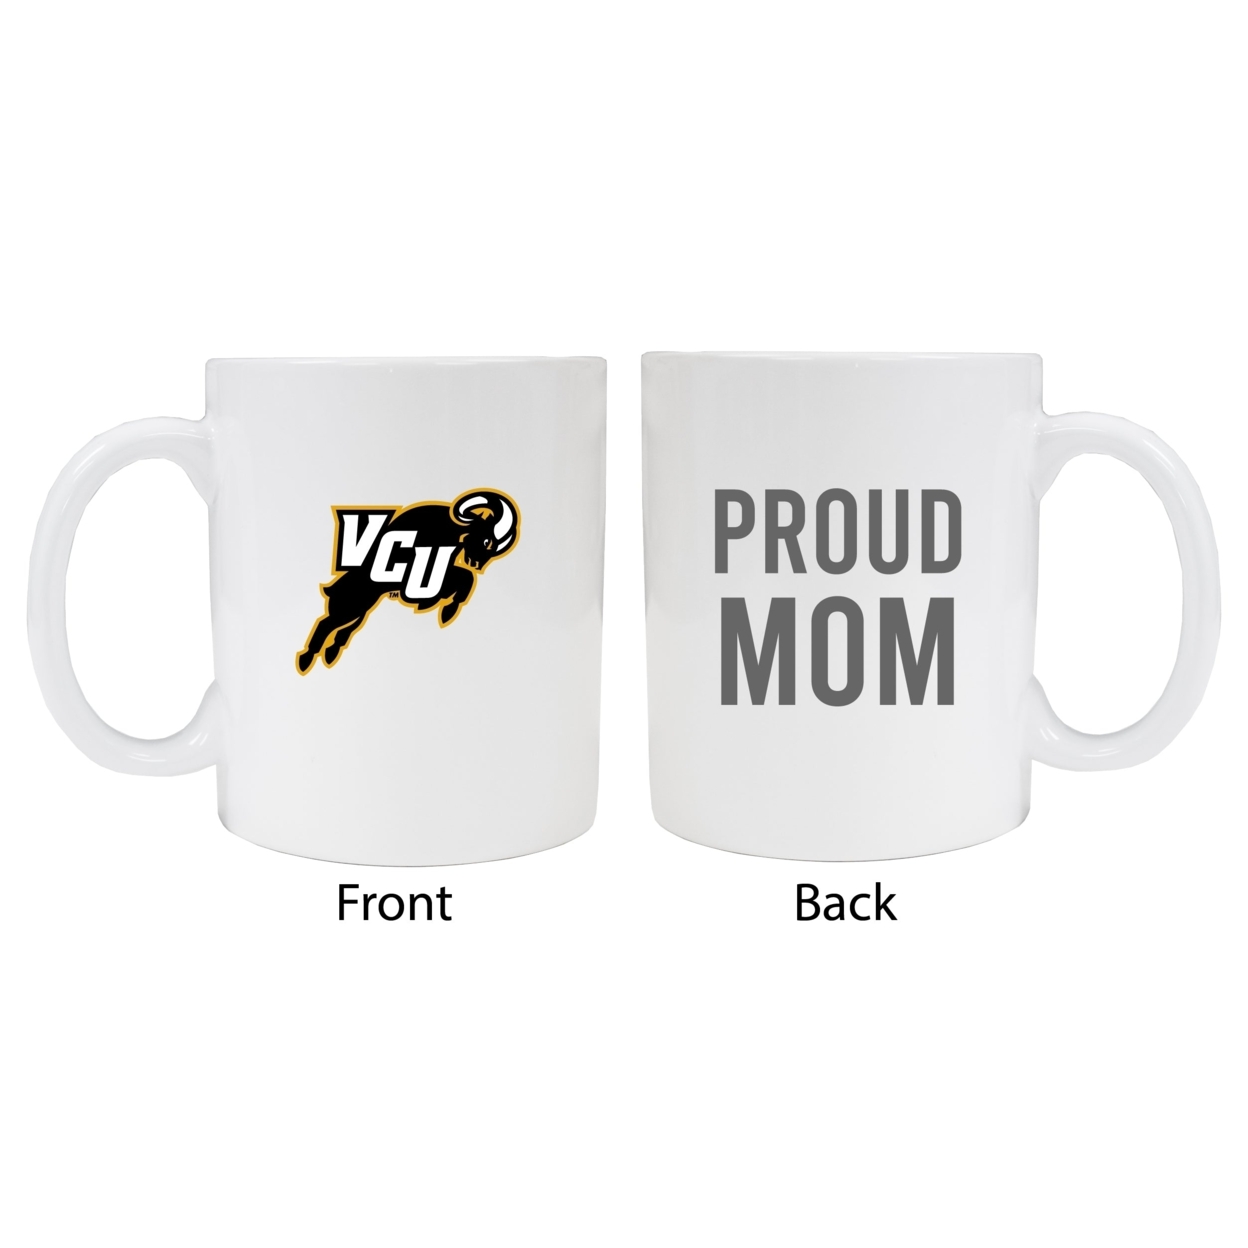 Virginia Commonwealth Proud Mom Ceramic Coffee Mug - White